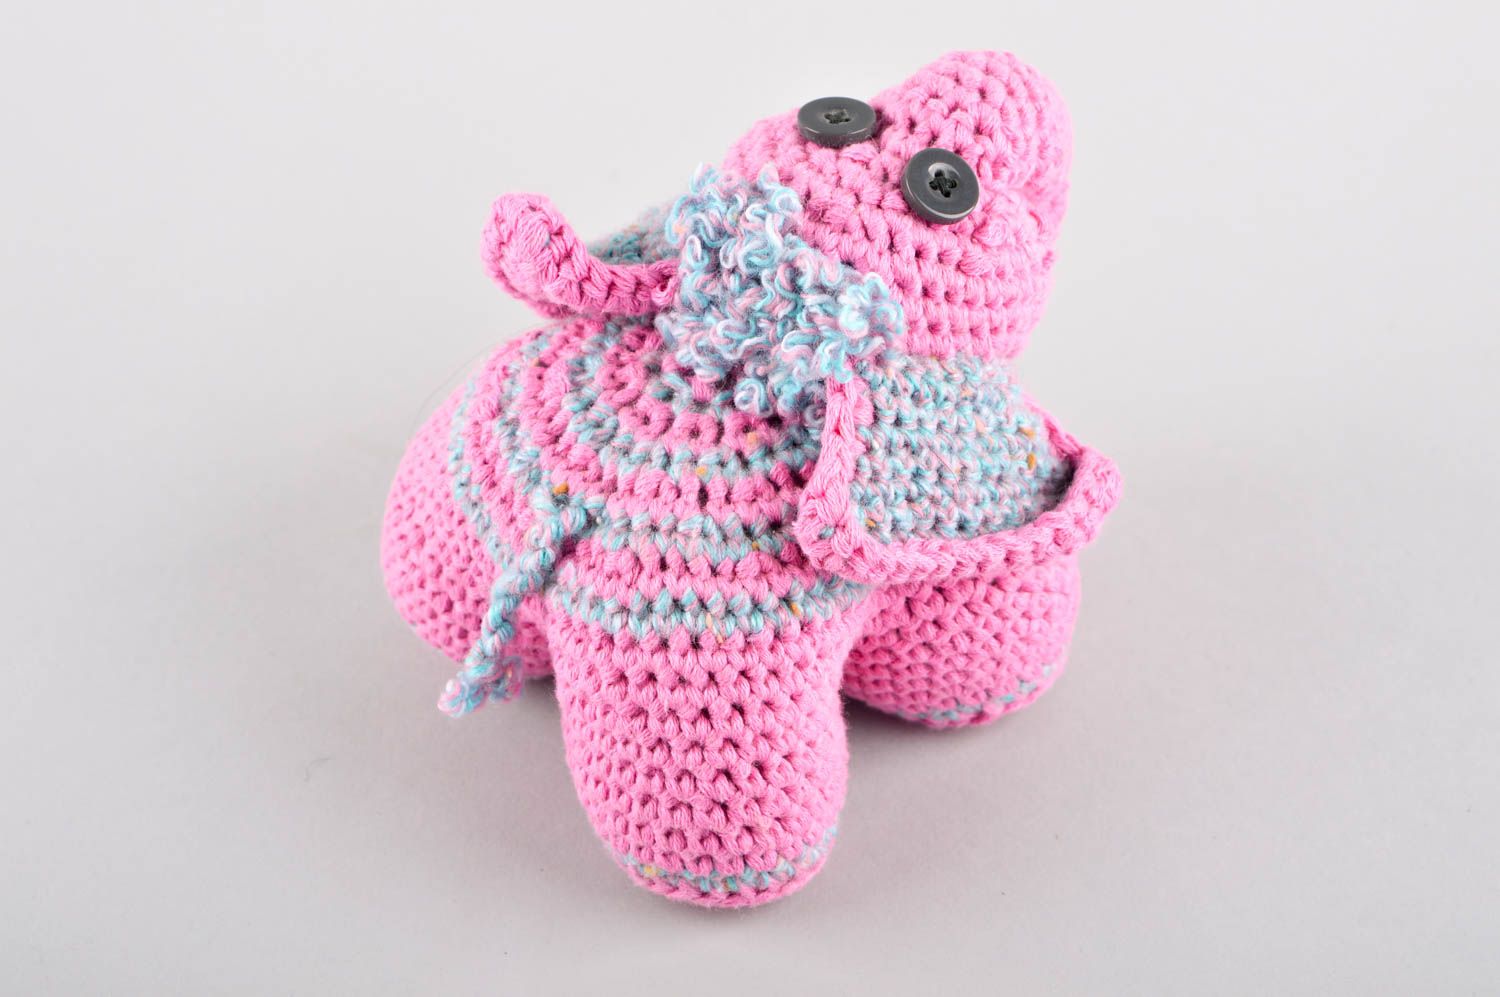 Handmade toy stuffed toy crocheted toy for babies soft nursery decor photo 4